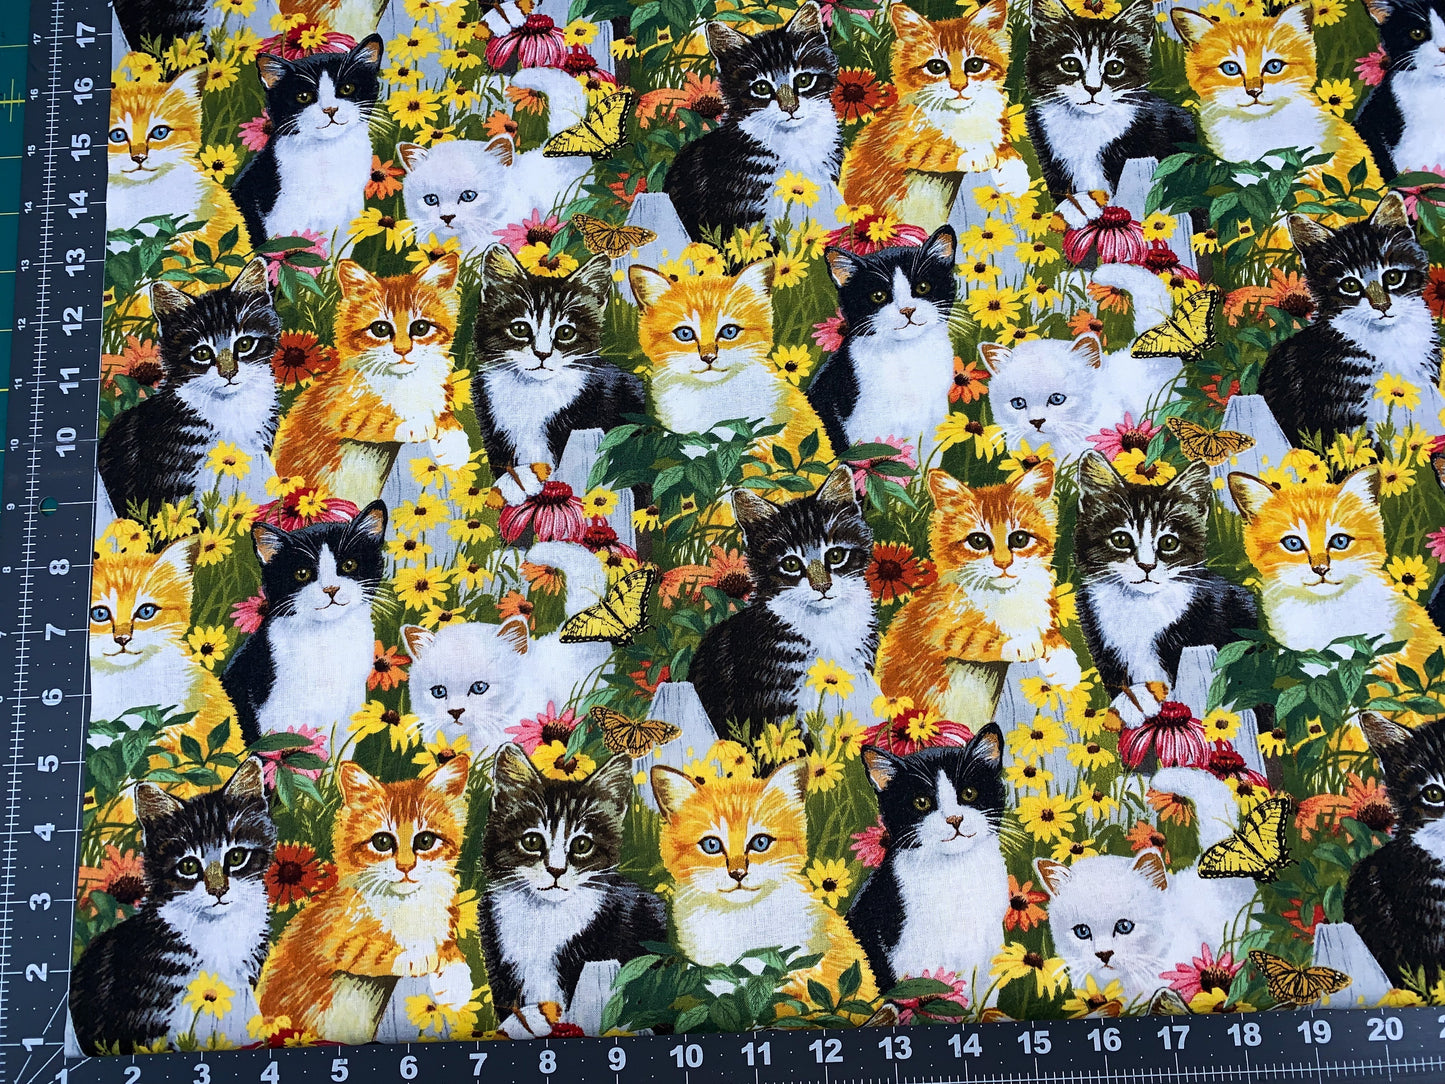 Yellow Daisies and Kitten fabric 3583 cat cotton fabric